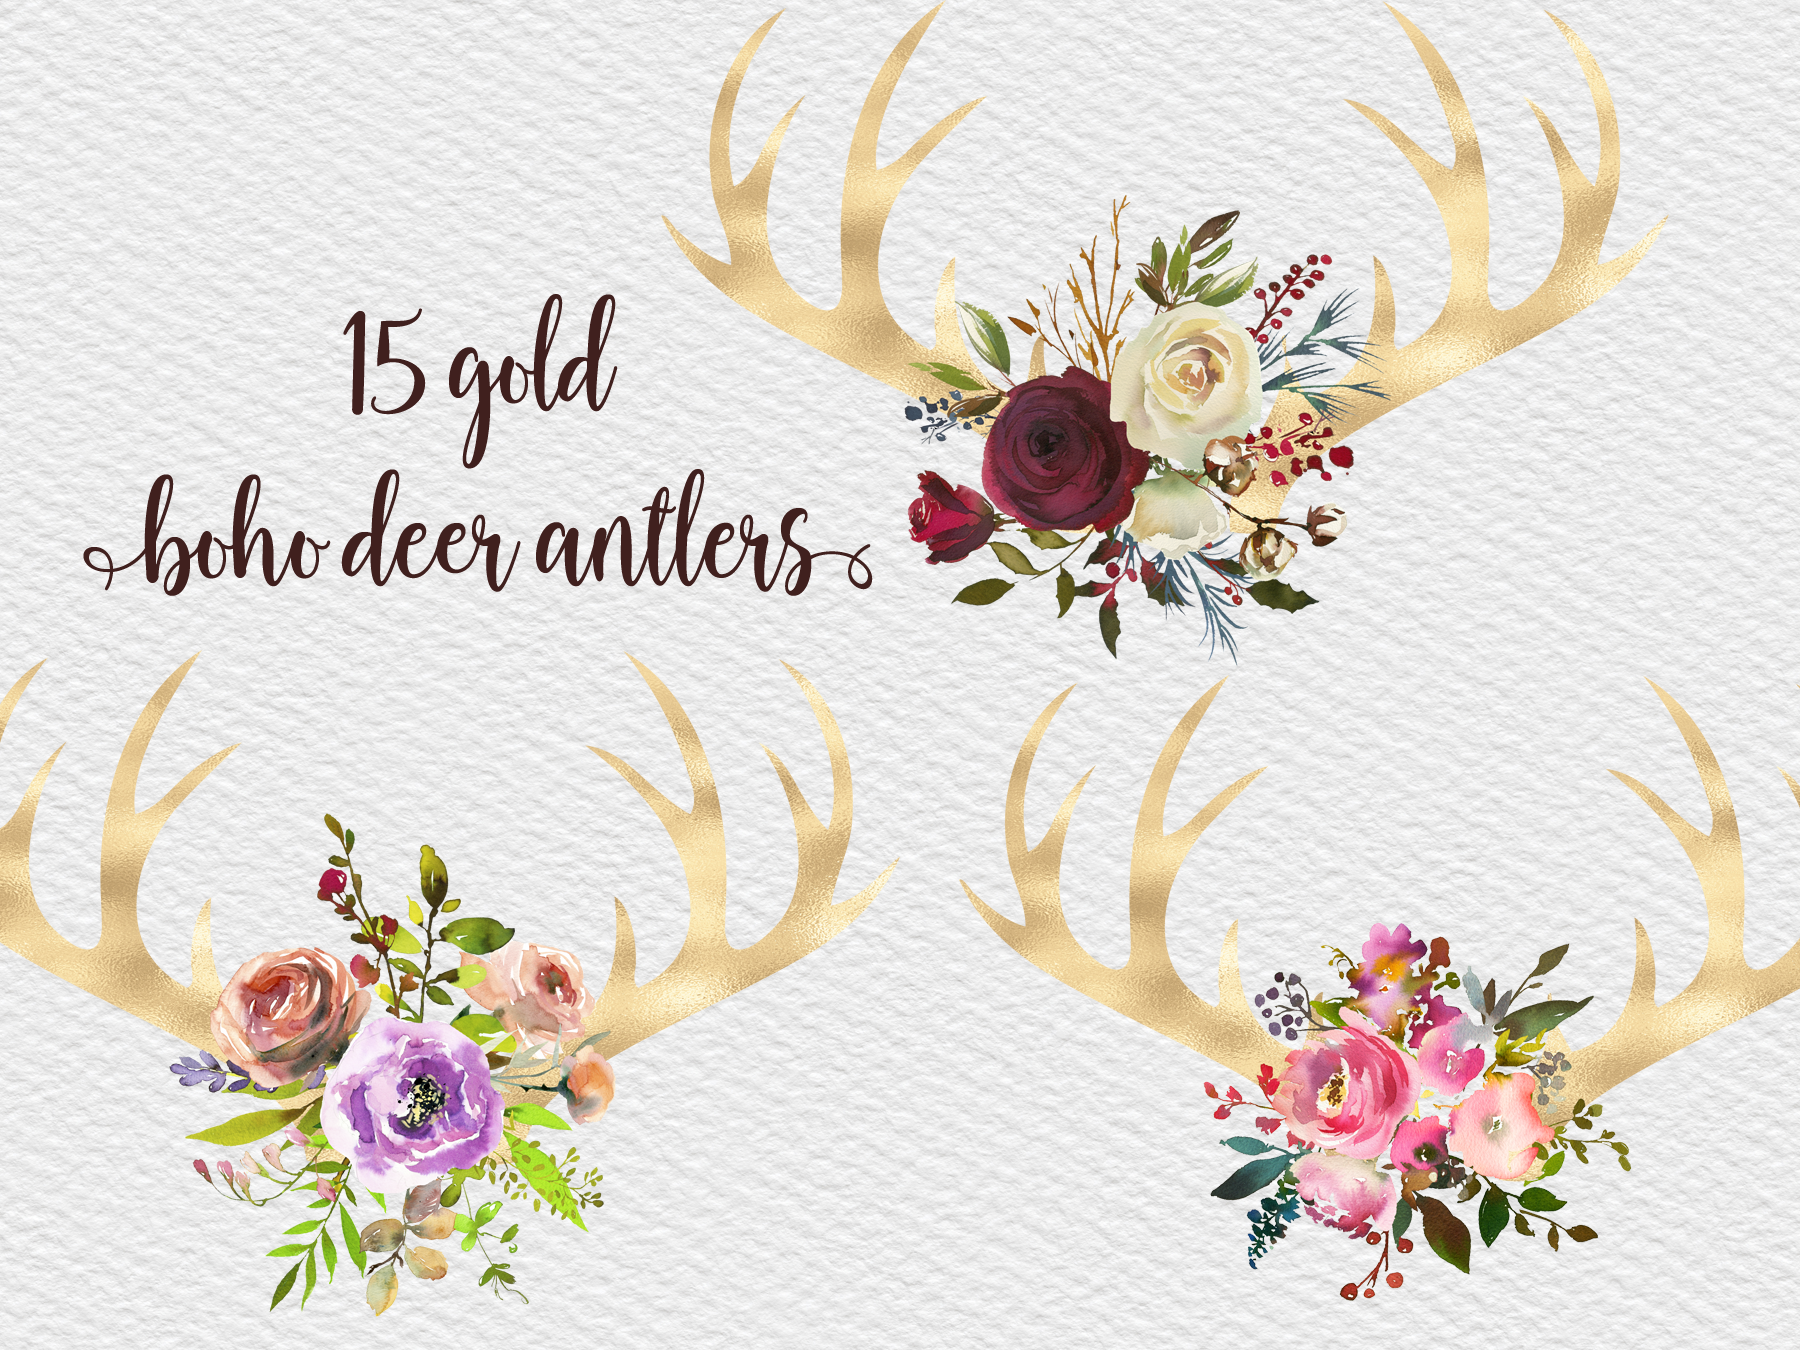 Boho Deer With Flowers Stickers for Junk Journals, Vintage Floral